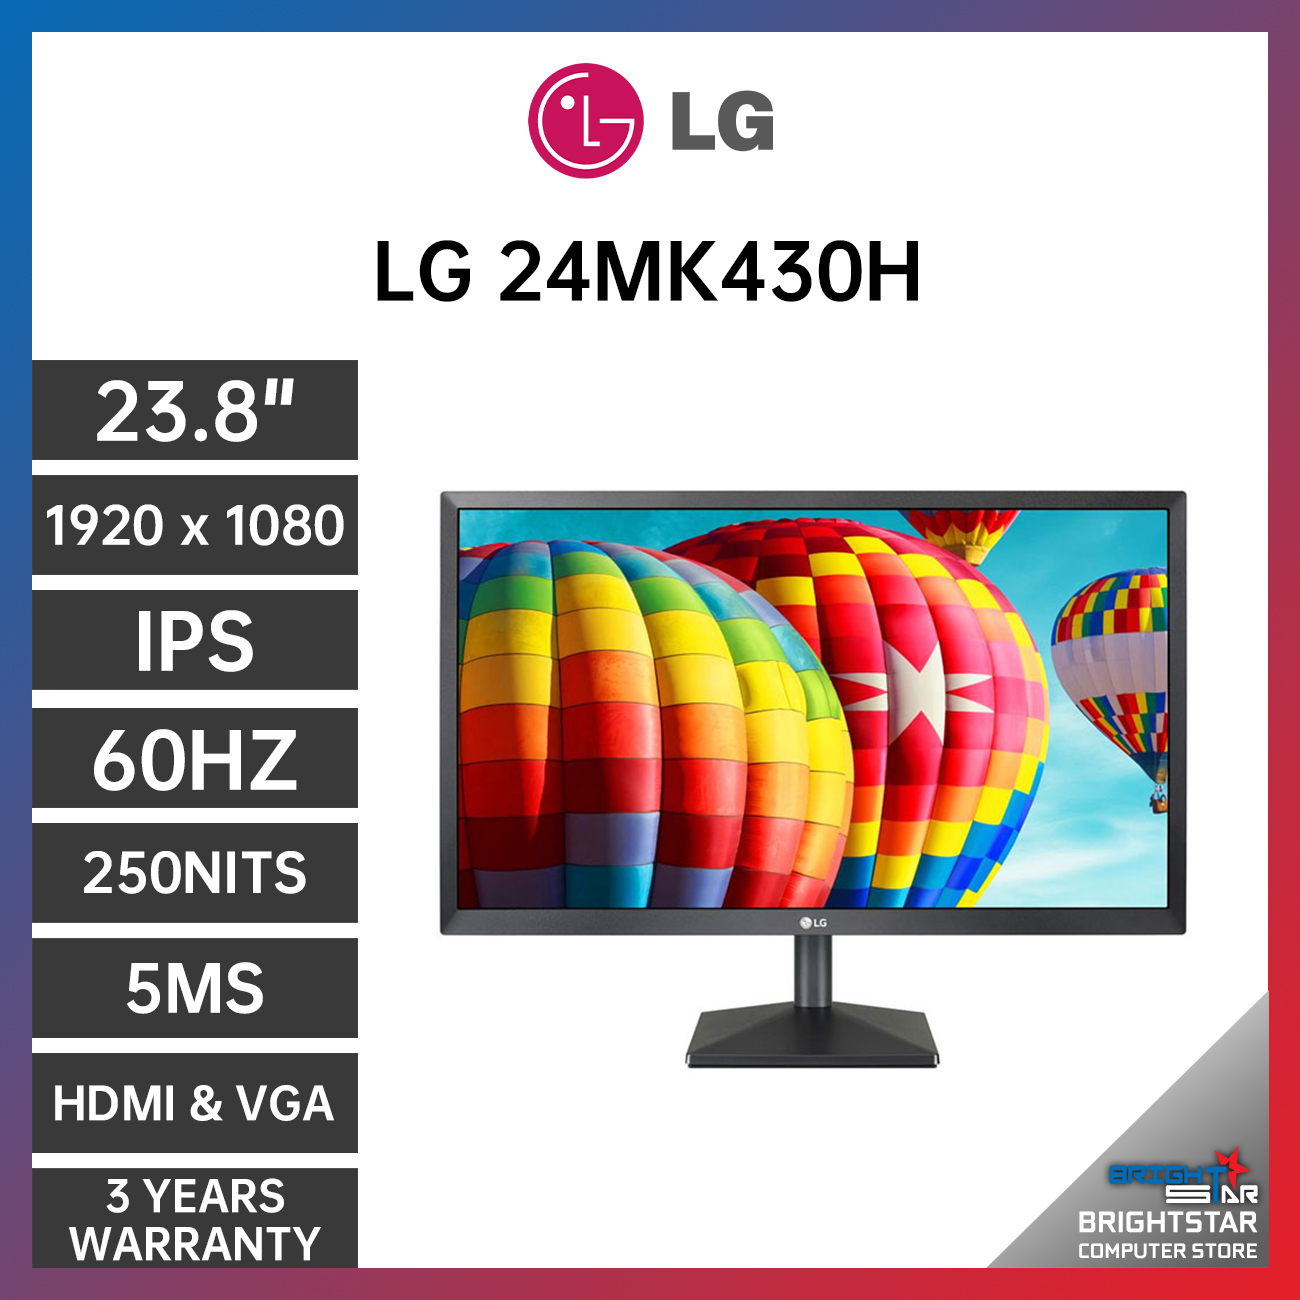 LG LED Monitor 24" 24MK430H FULL HD IPS 60Hz ⋆ Brightstar Computer